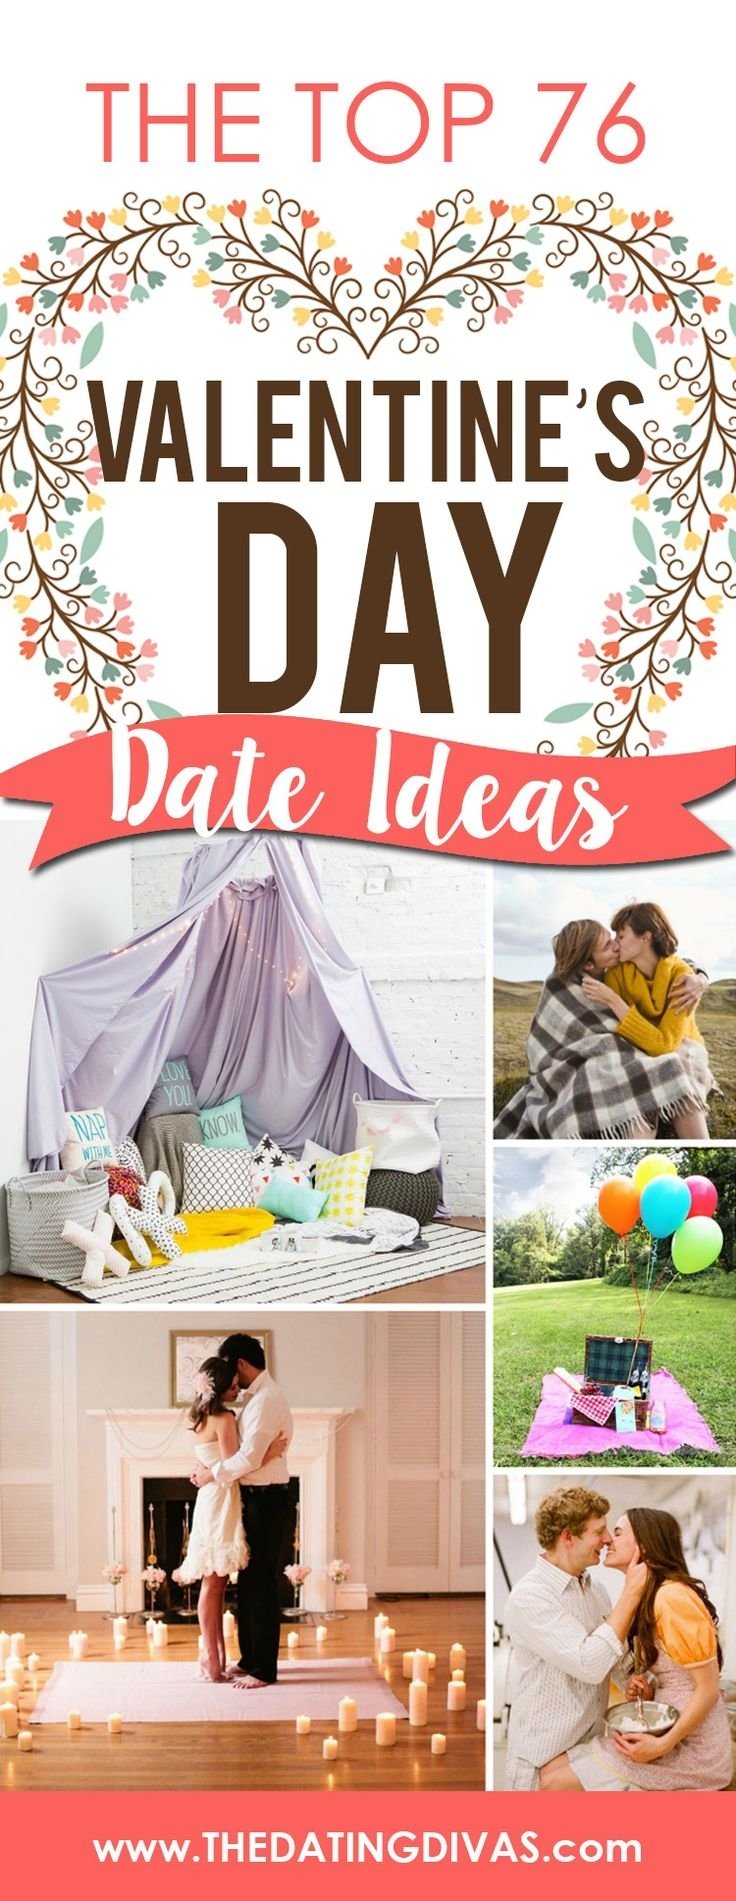 10 Stylish Romantic Valentines Day Date Ideas 52 best valentines day ideas images on pinterest valentines 6 2022